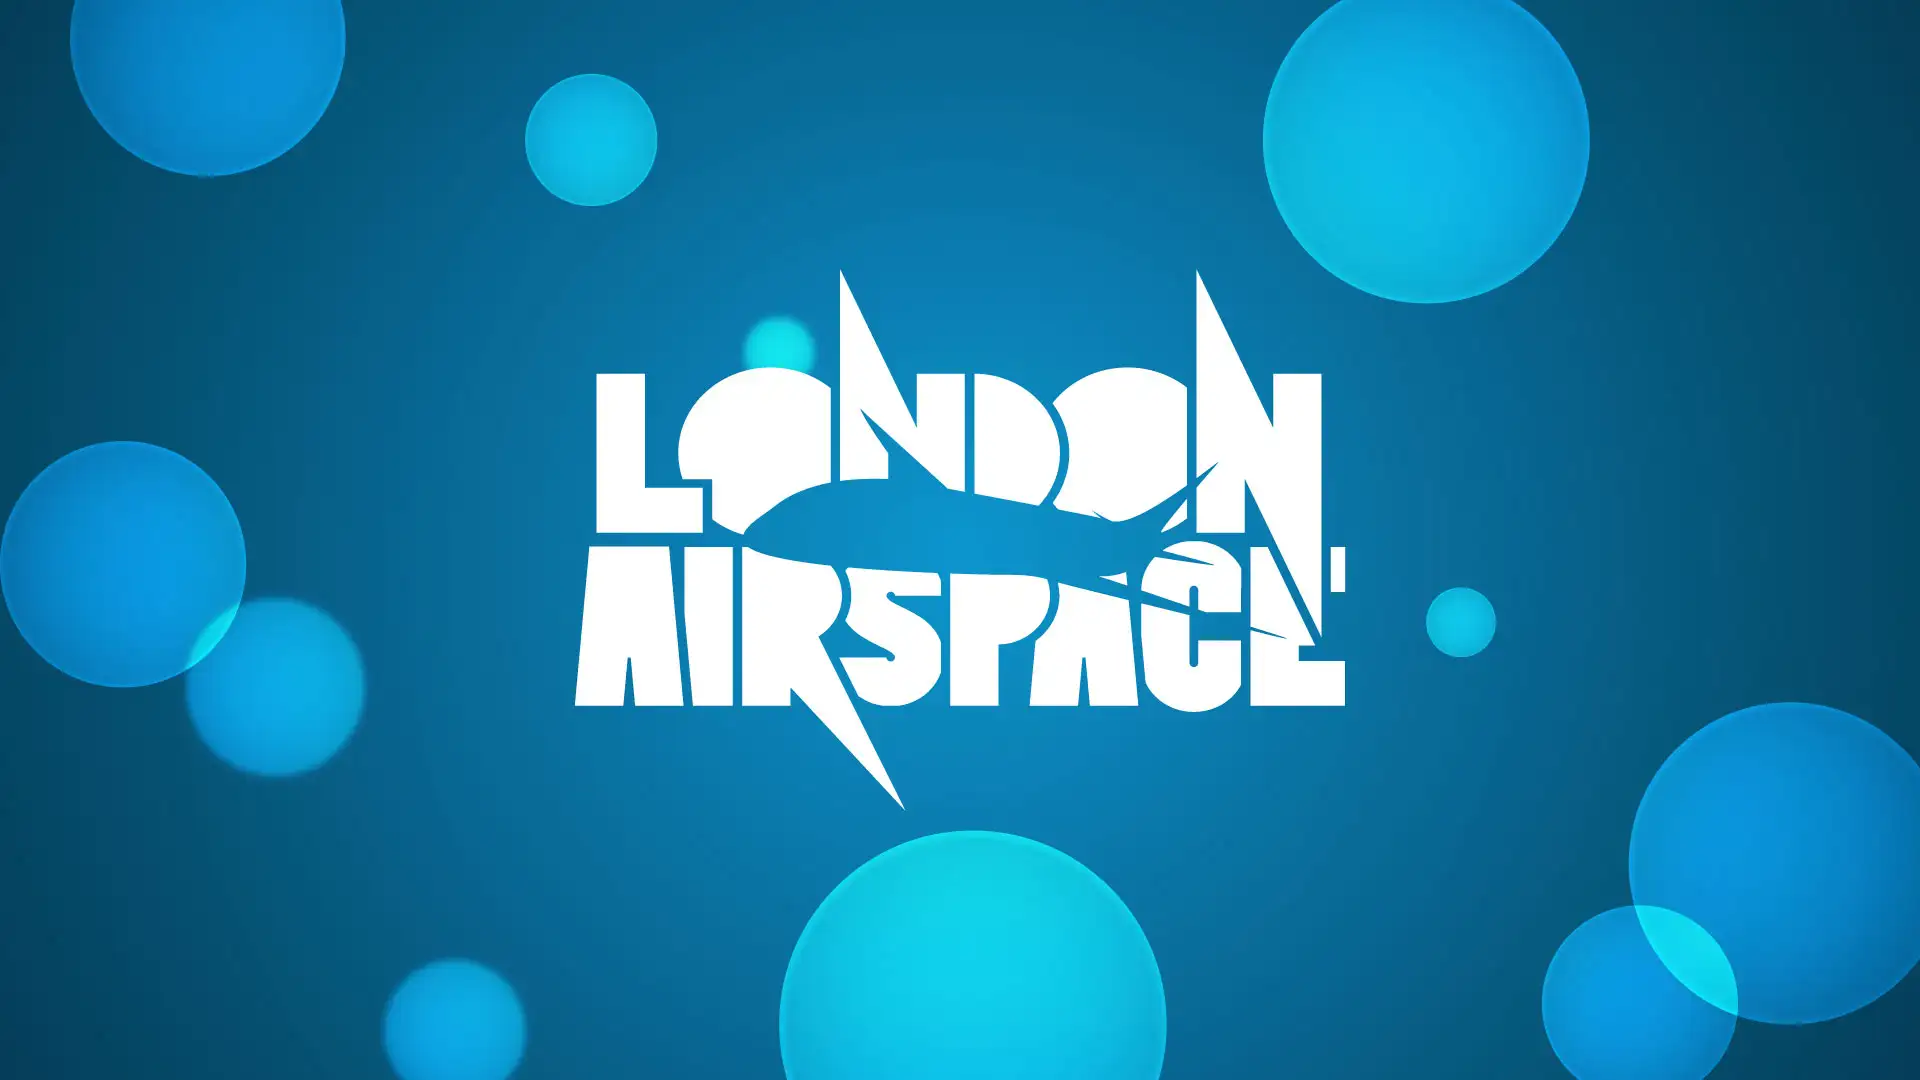 London Airspace logo branding design by Dusty Drake